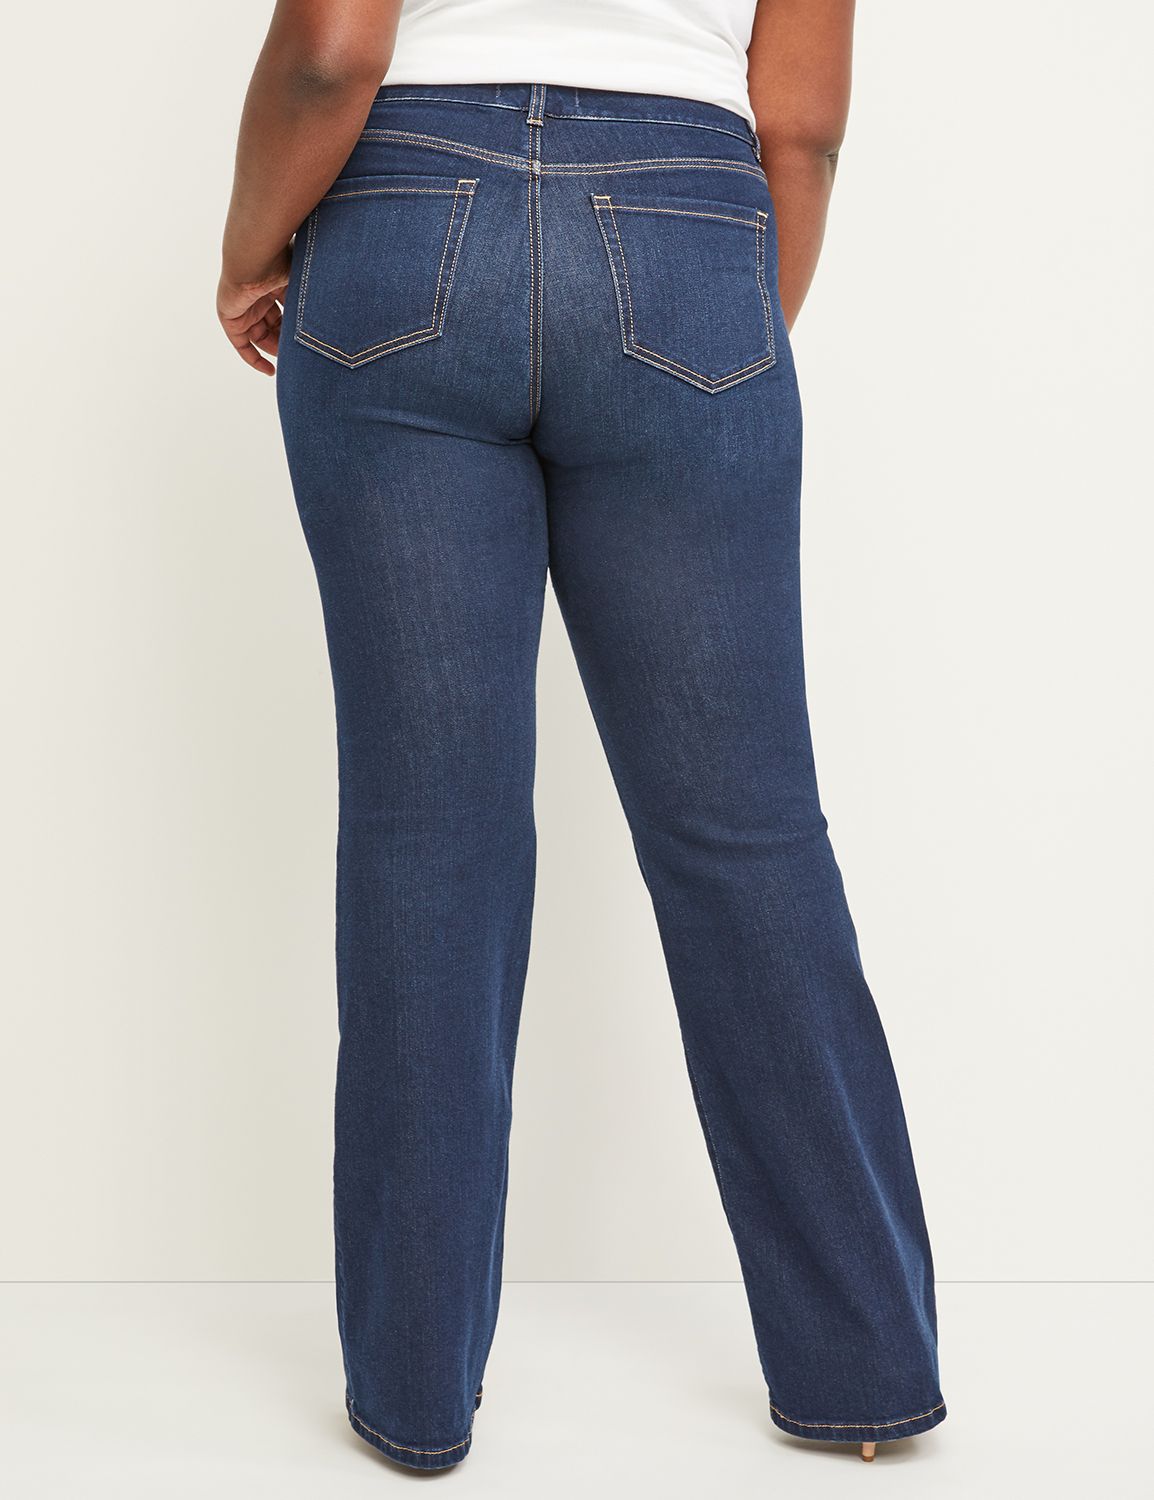 lane bryant essential stretch jeans